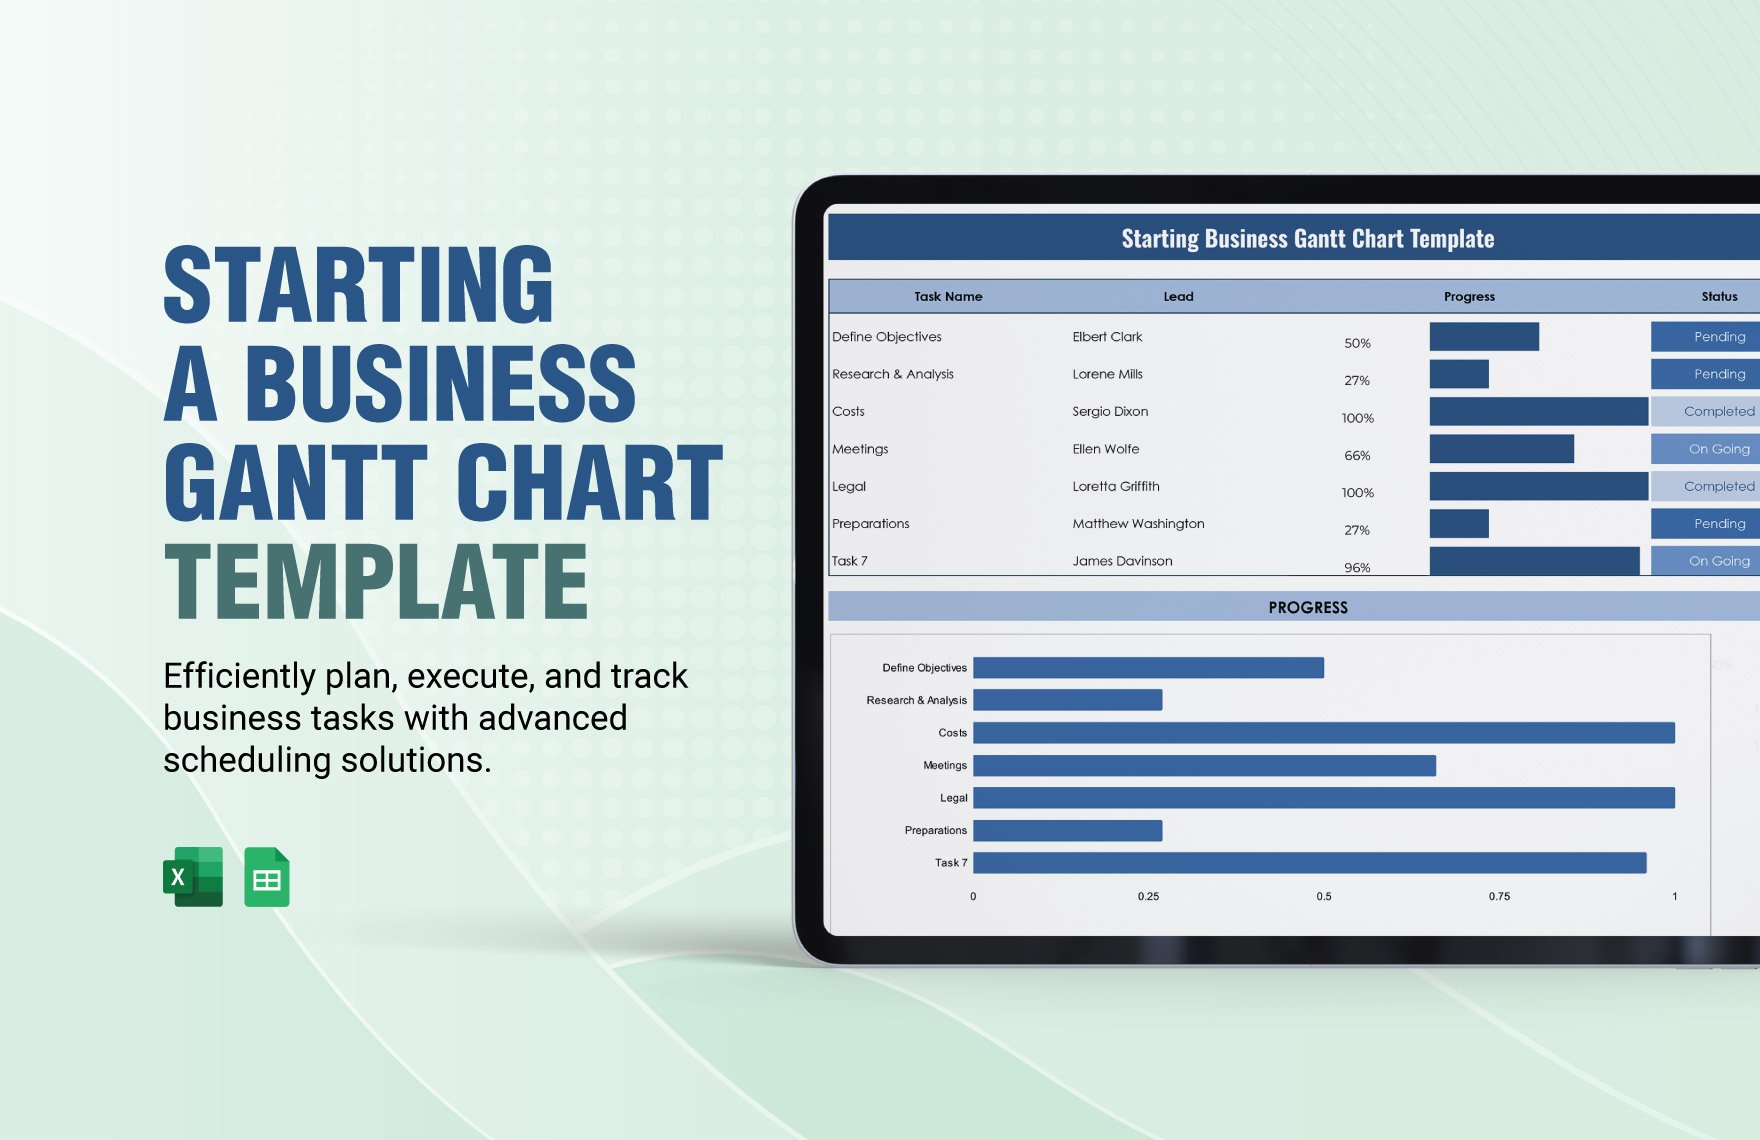 Starting a Business Gantt Chart Template in Excel, Google Sheets